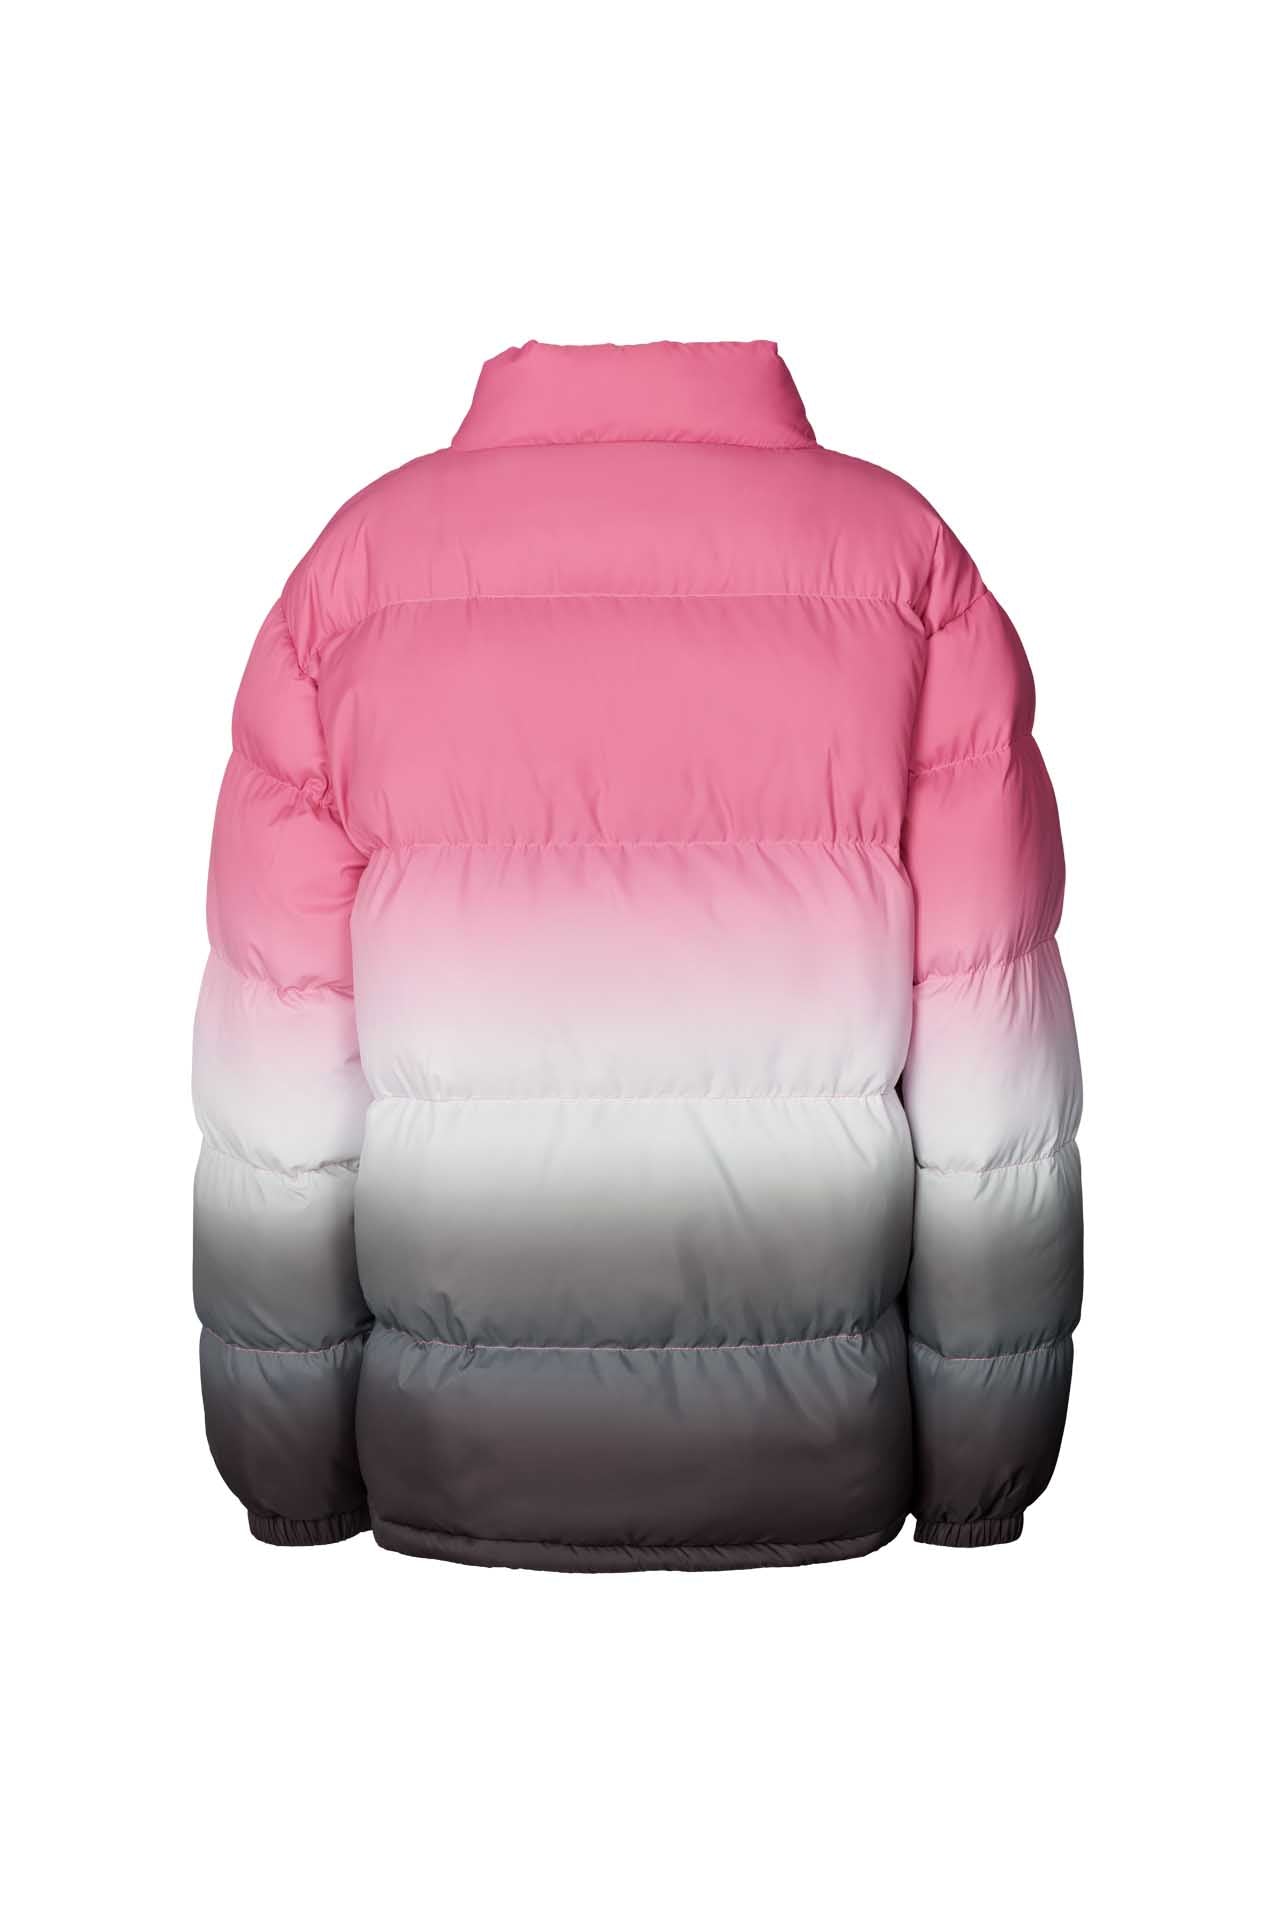 Lollys Laundry Lockhart Down jacket Jacket 51 Pink